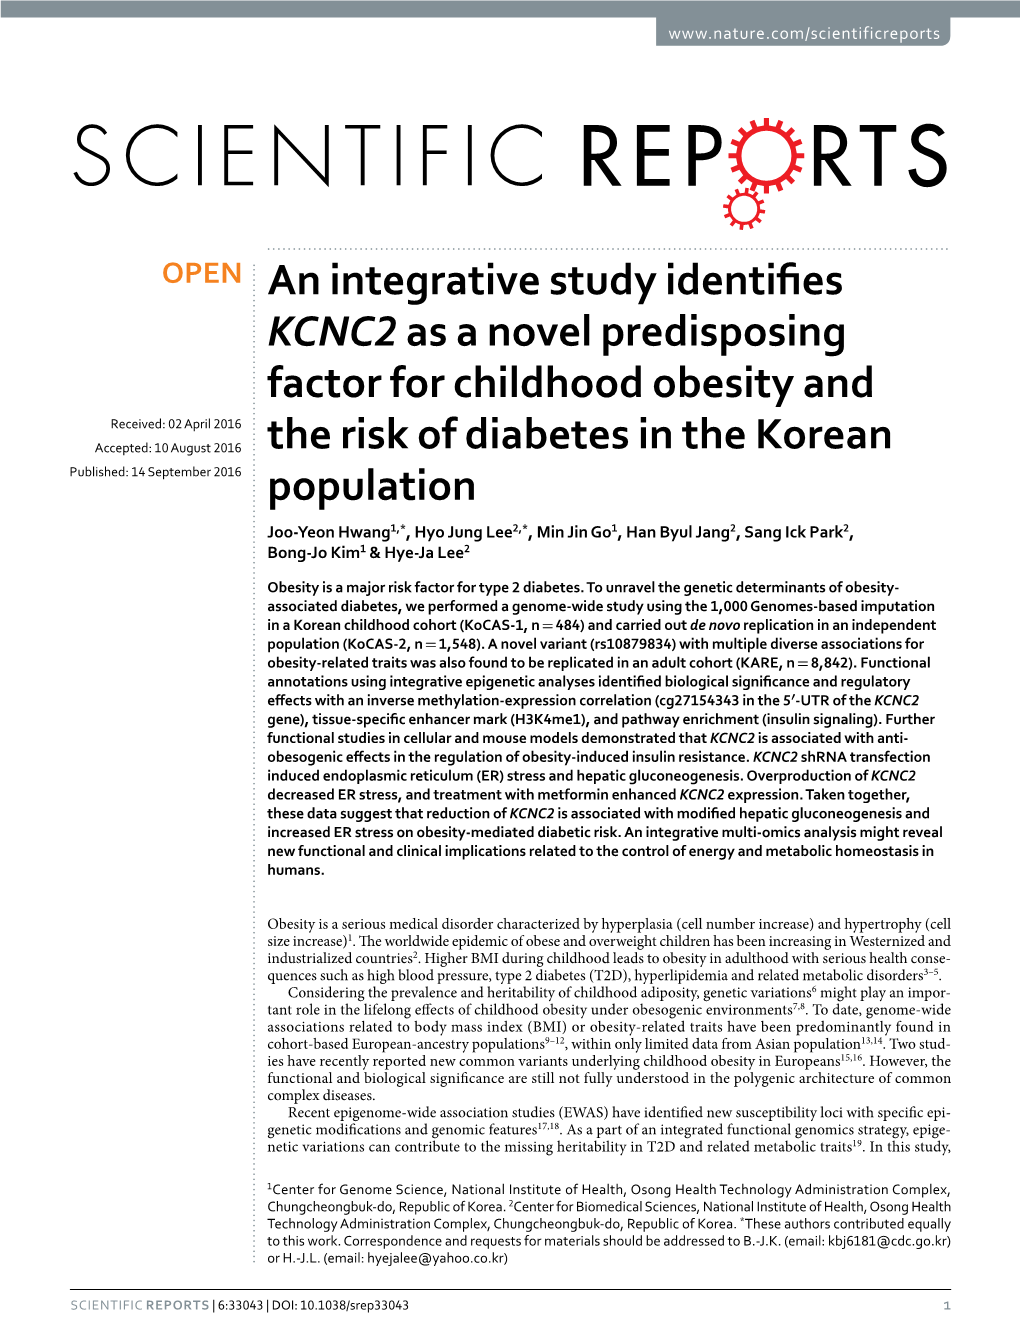 An Integrative Study Identifies KCNC2 As a Novel Predisposing Factor For